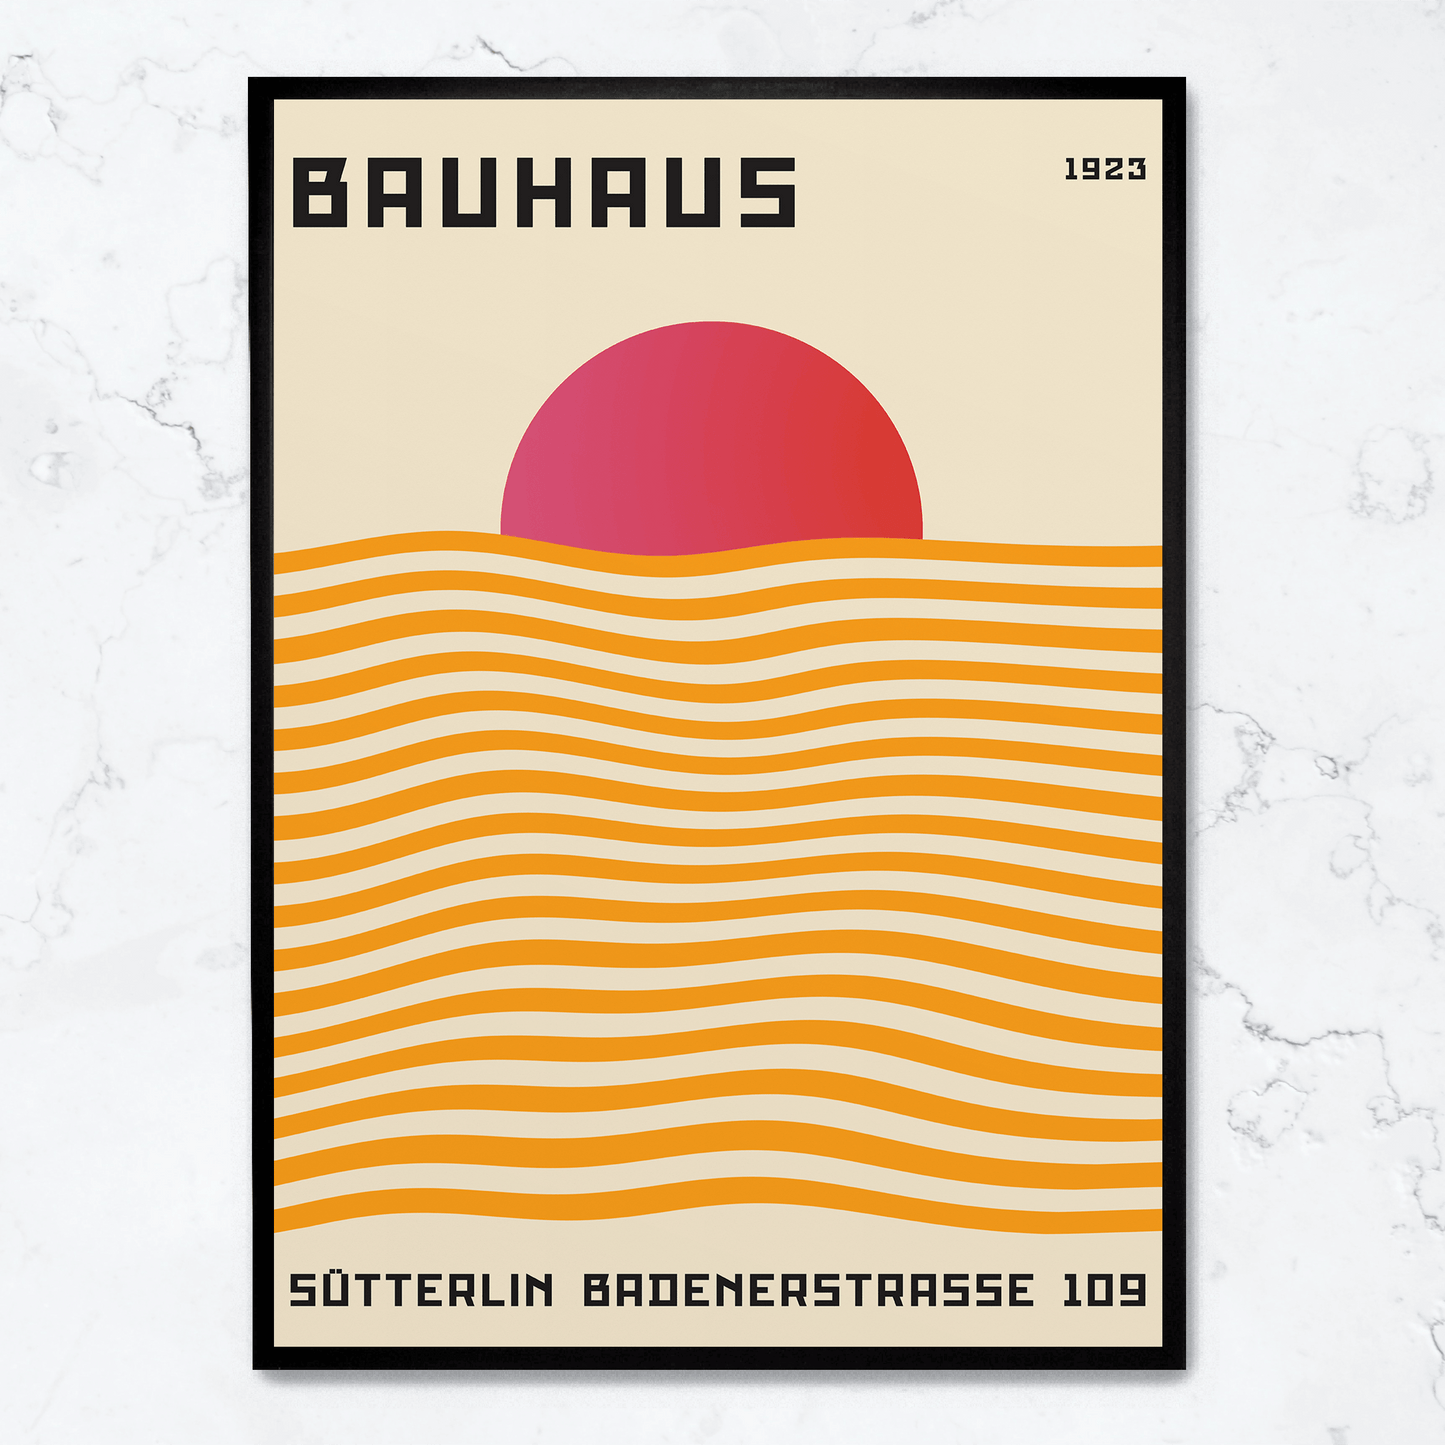 Bauhaus Red Sun